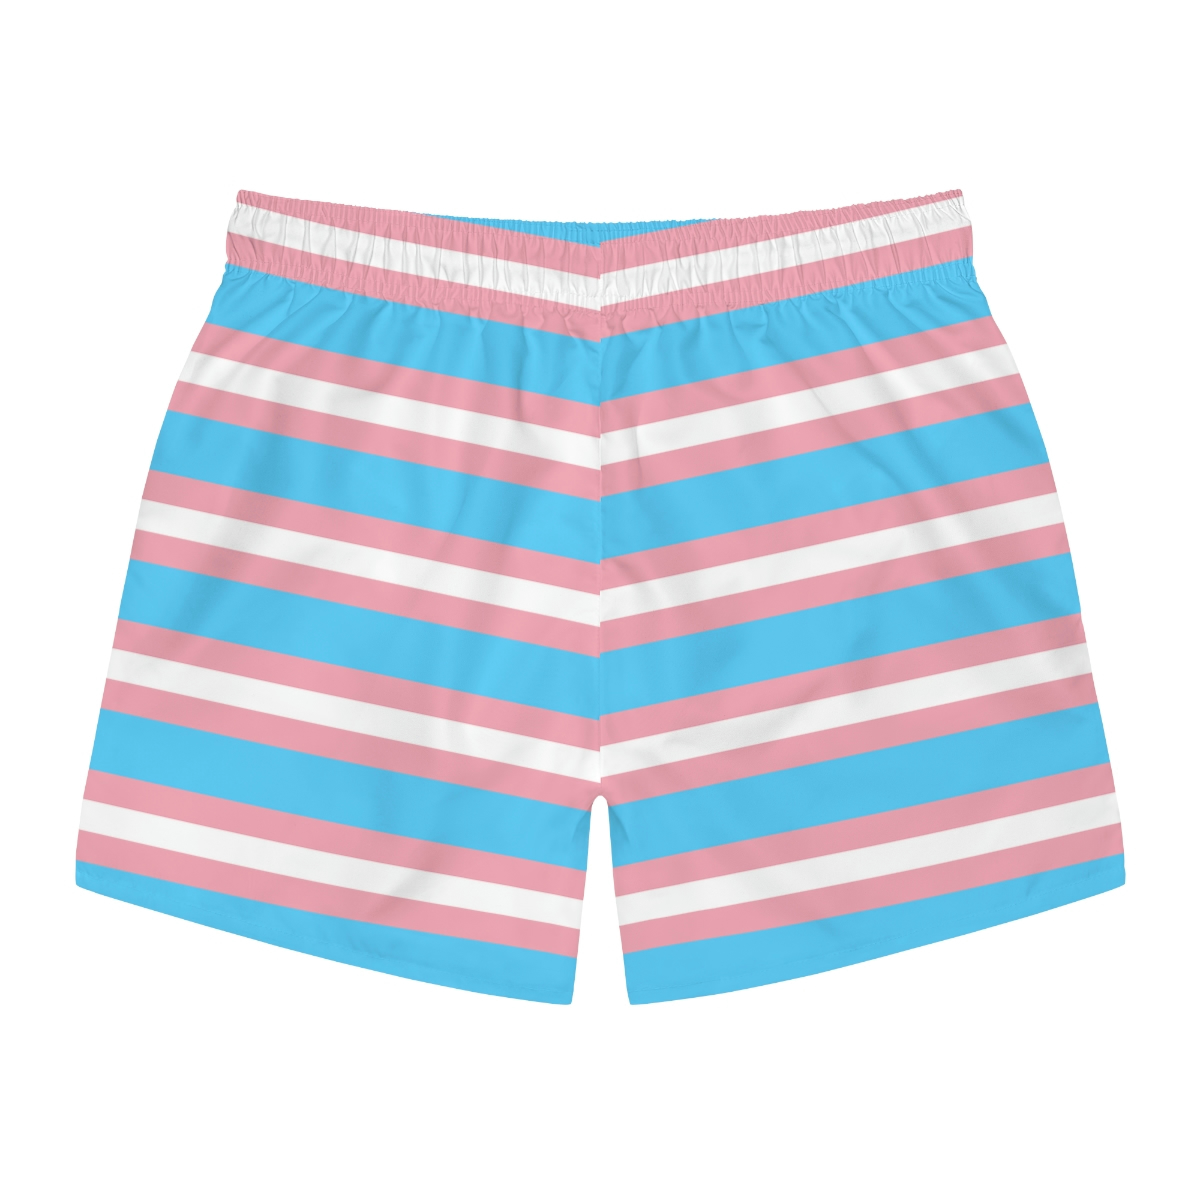 Transgender Flag Shorts